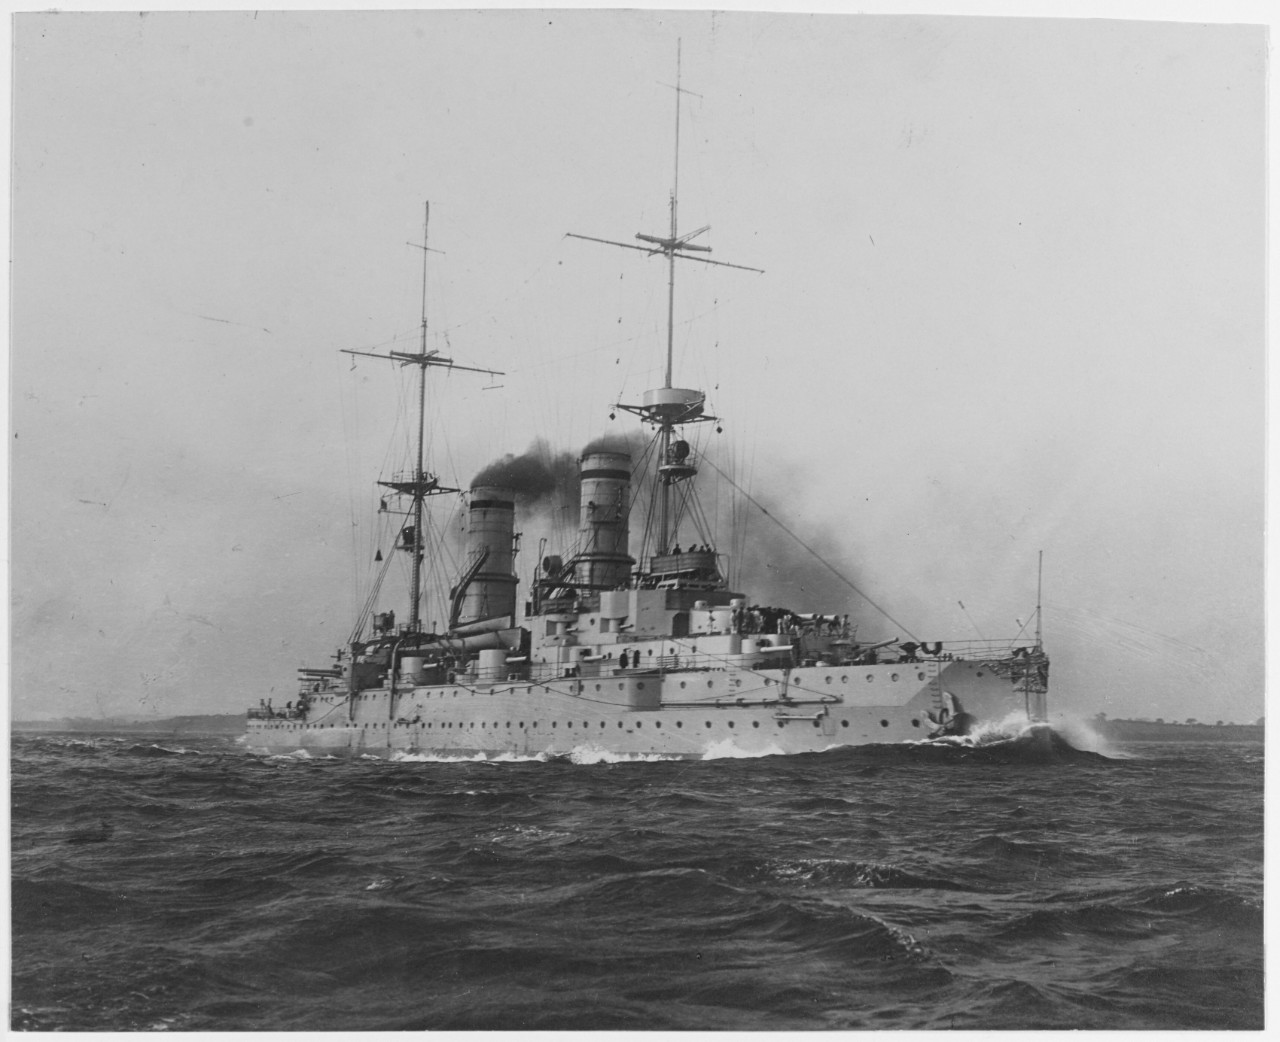 KAISER BARBAROSSA (German battleship, 1900-1920)